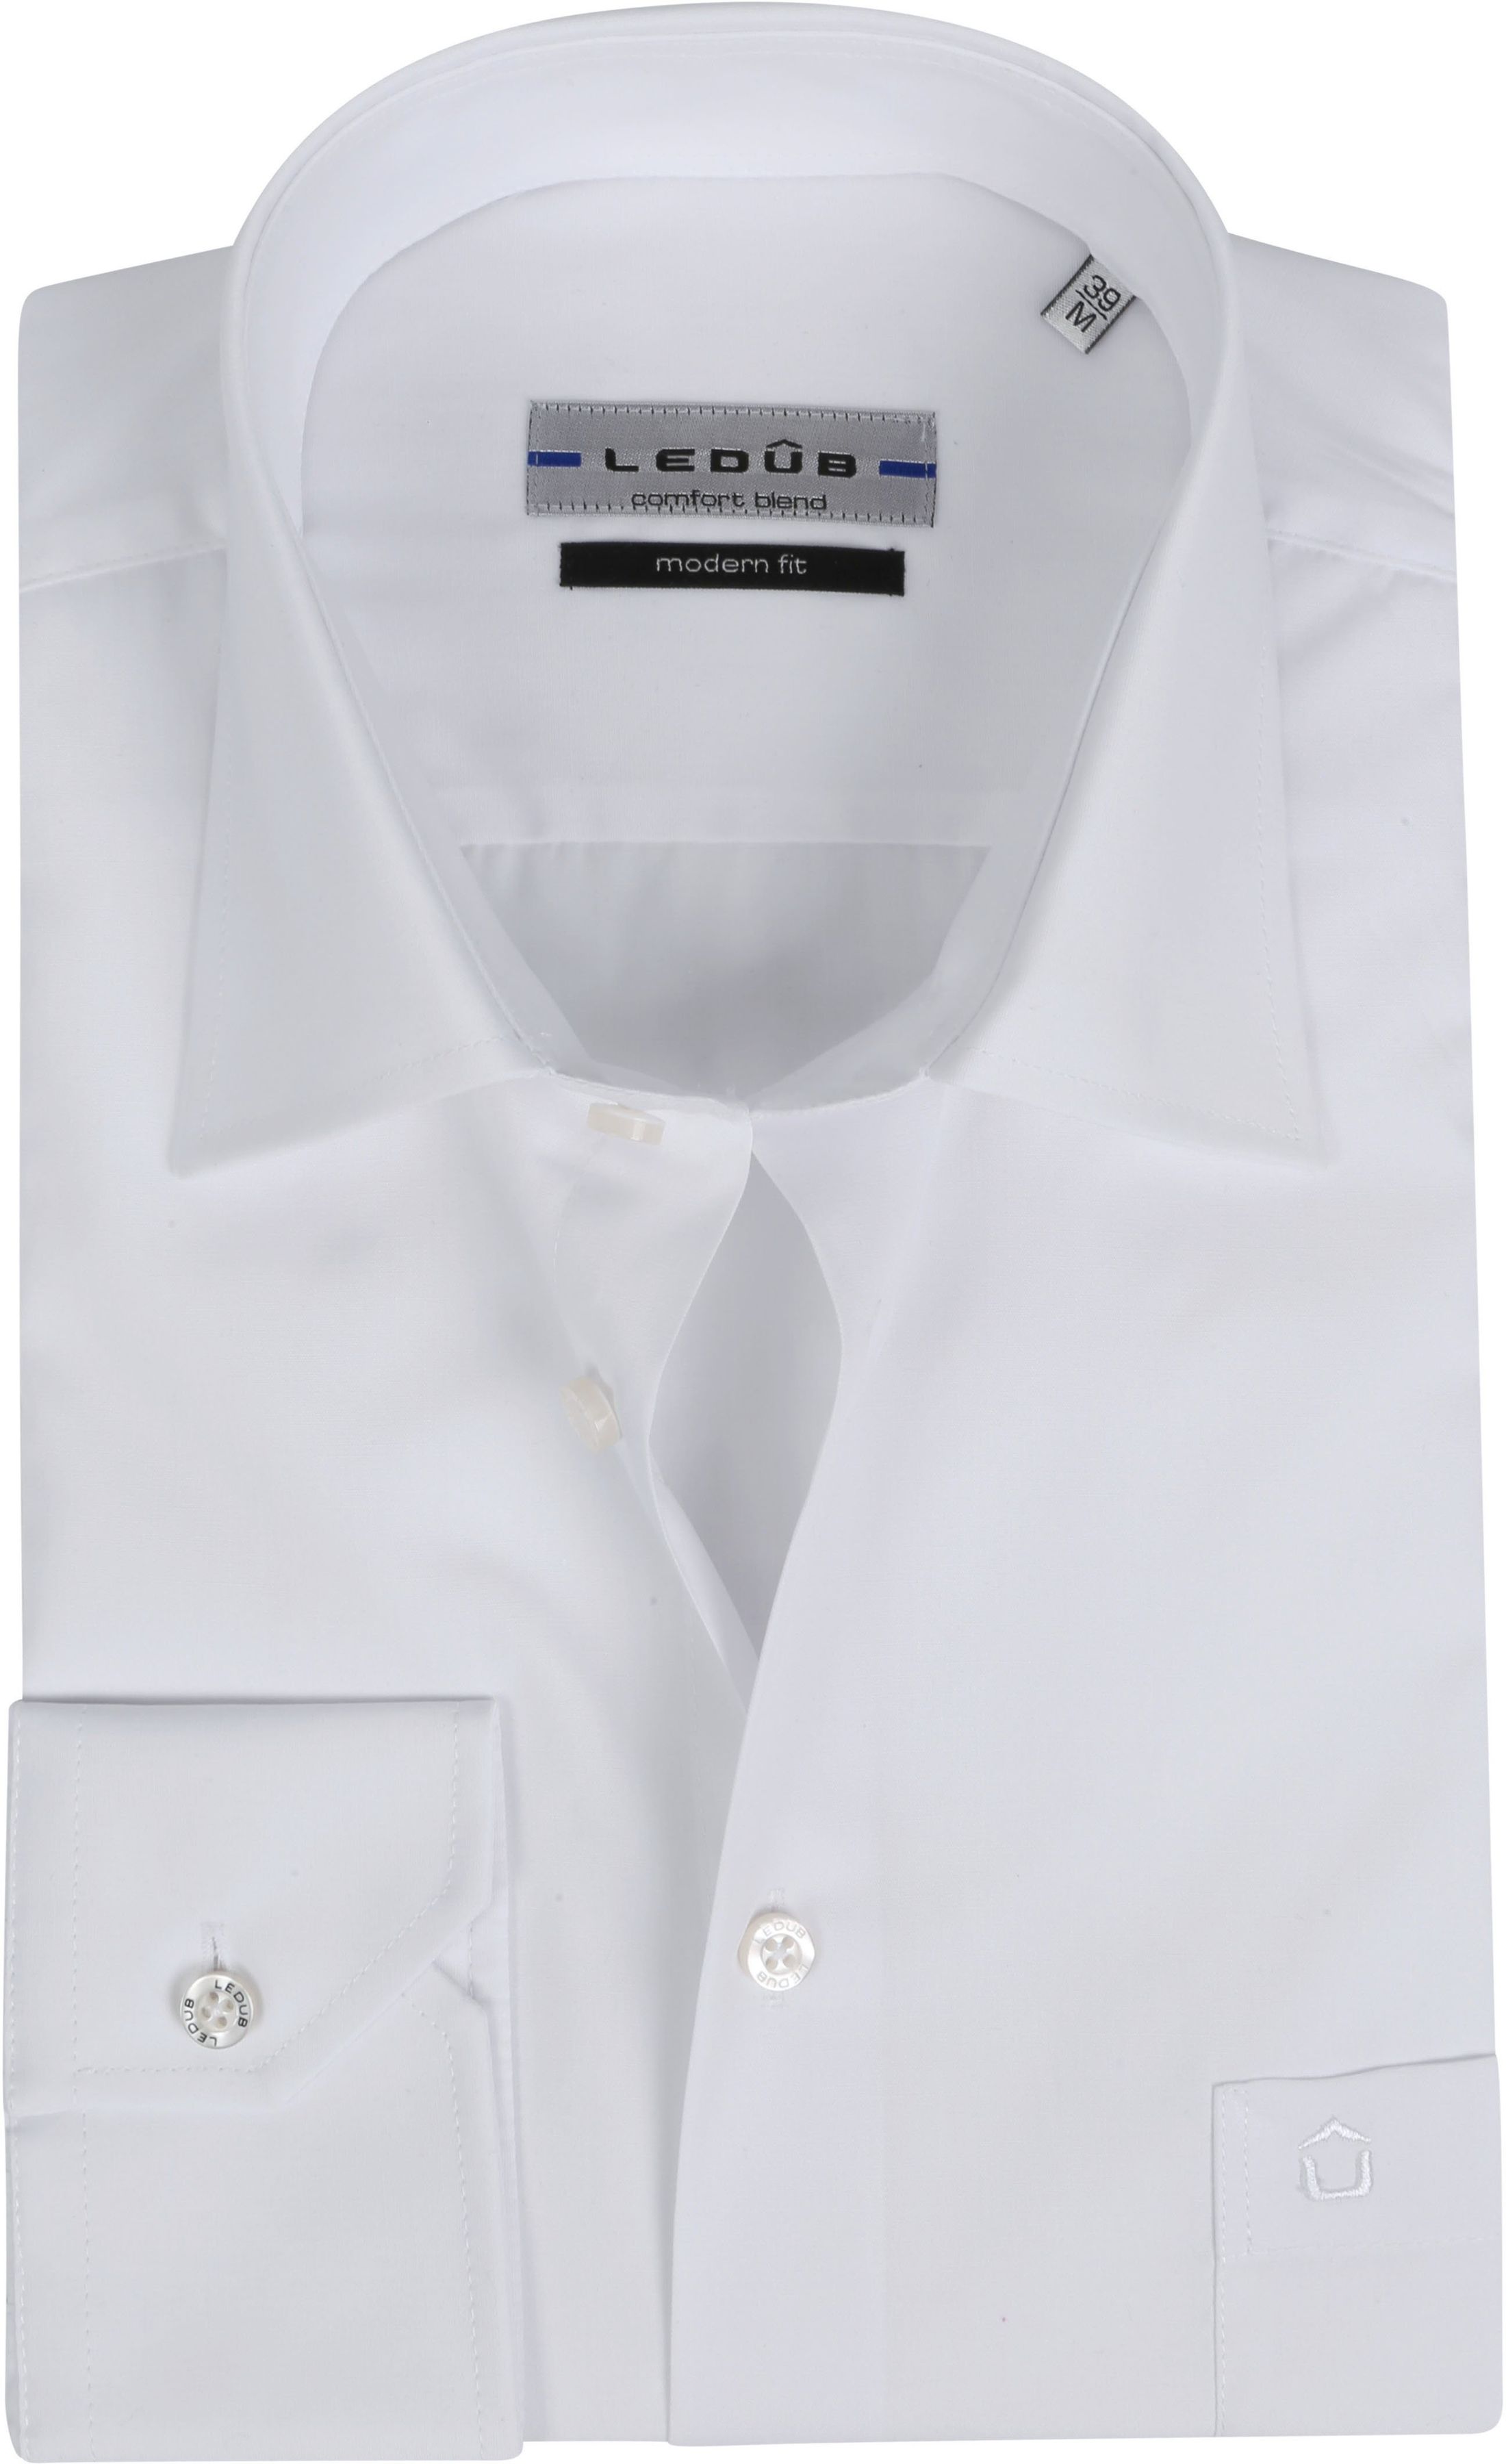 Ledub Shirt Modern Fit White size 15